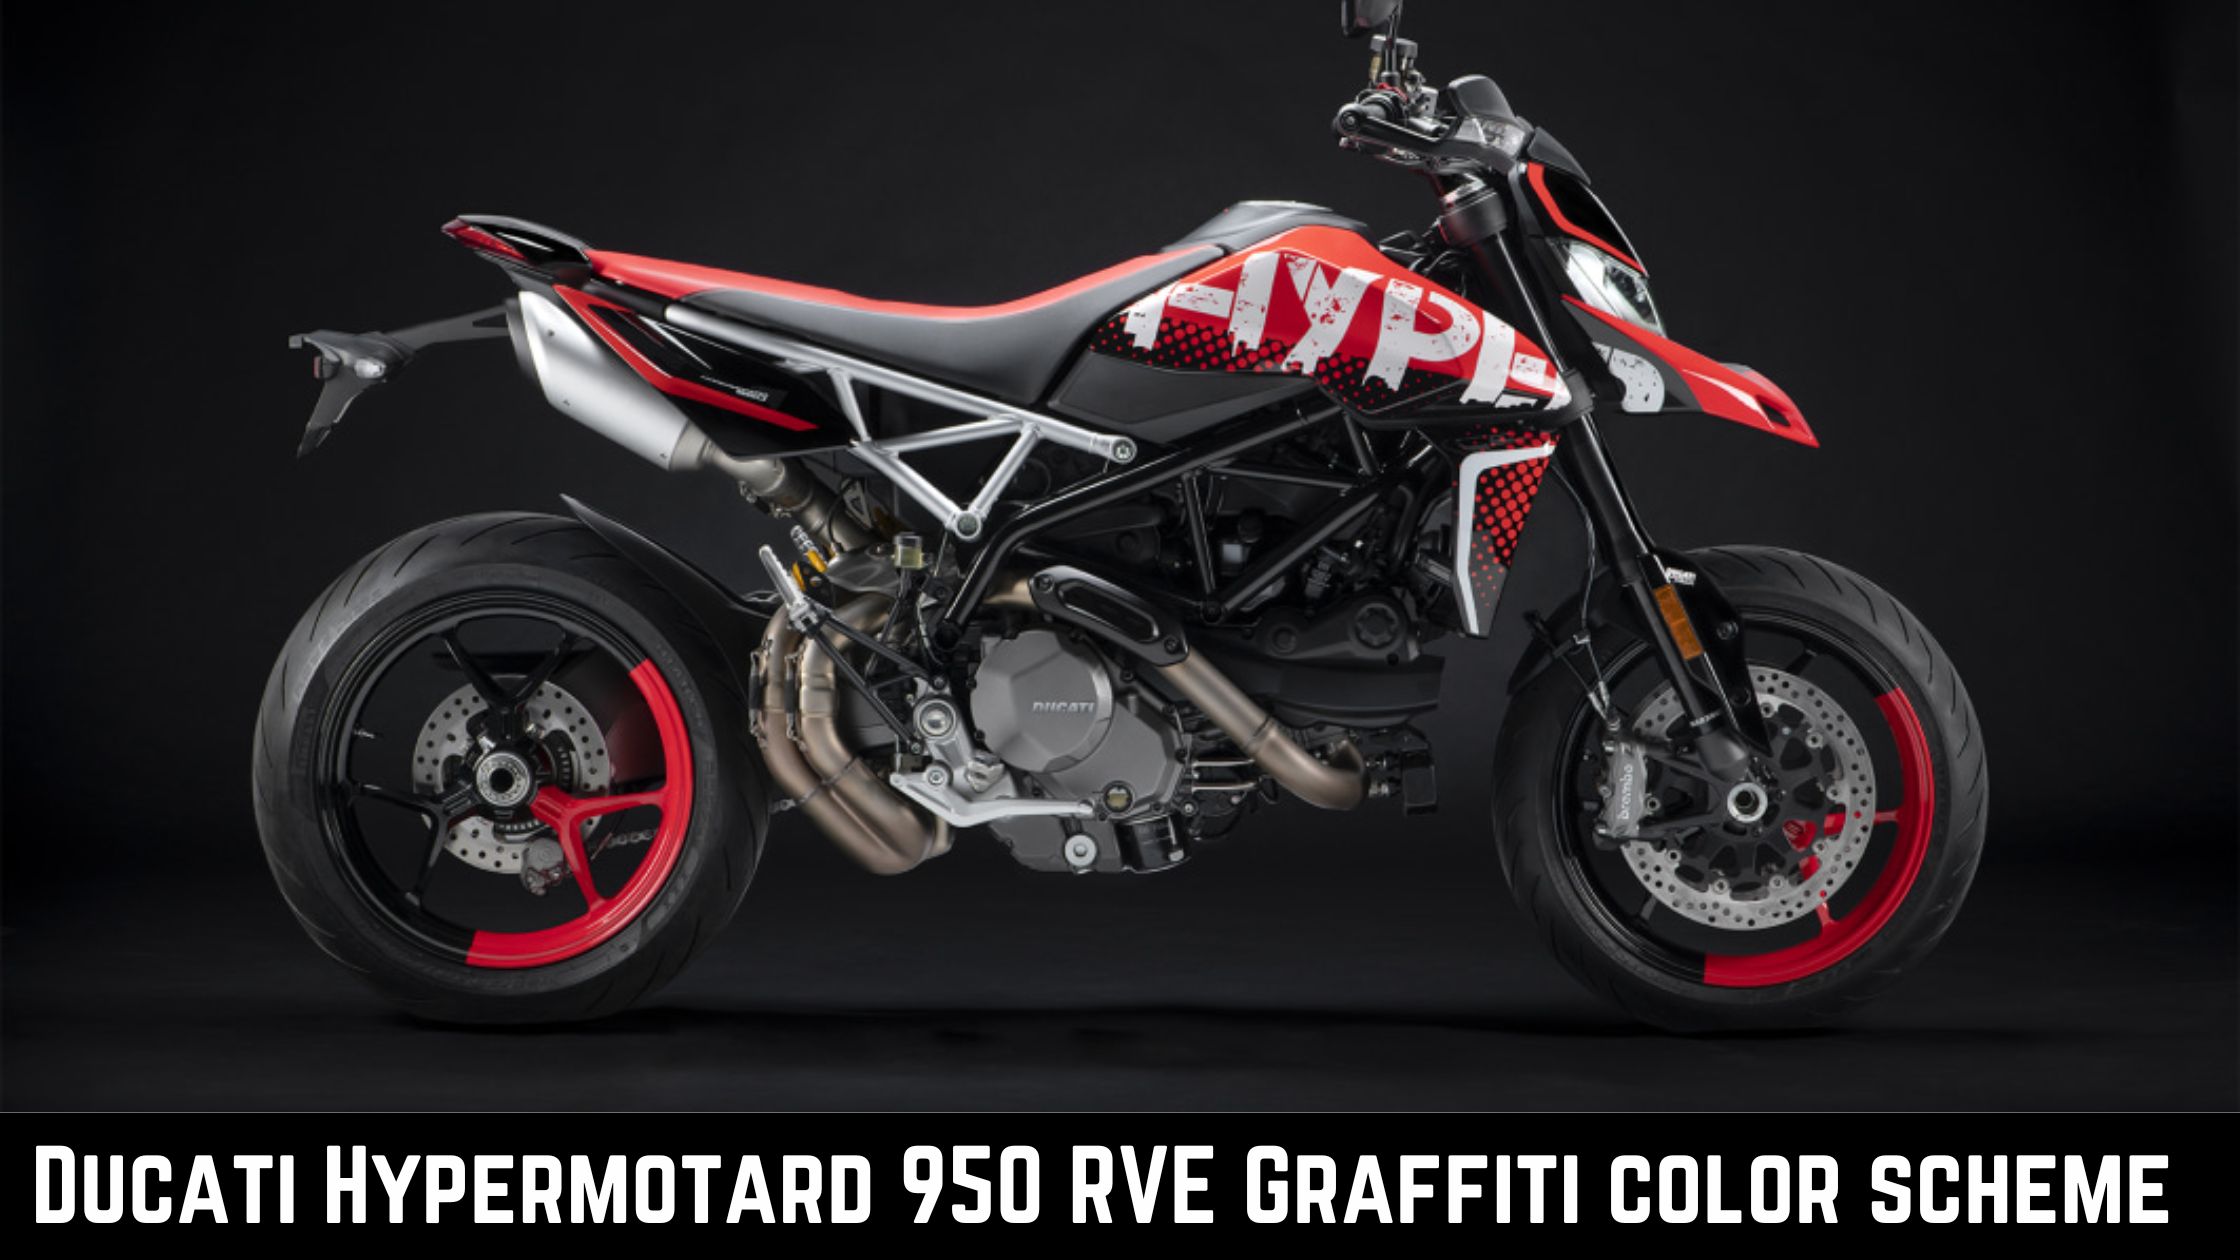 Ducati Hypermotard 950 RVE gets a new Graffiti color scheme